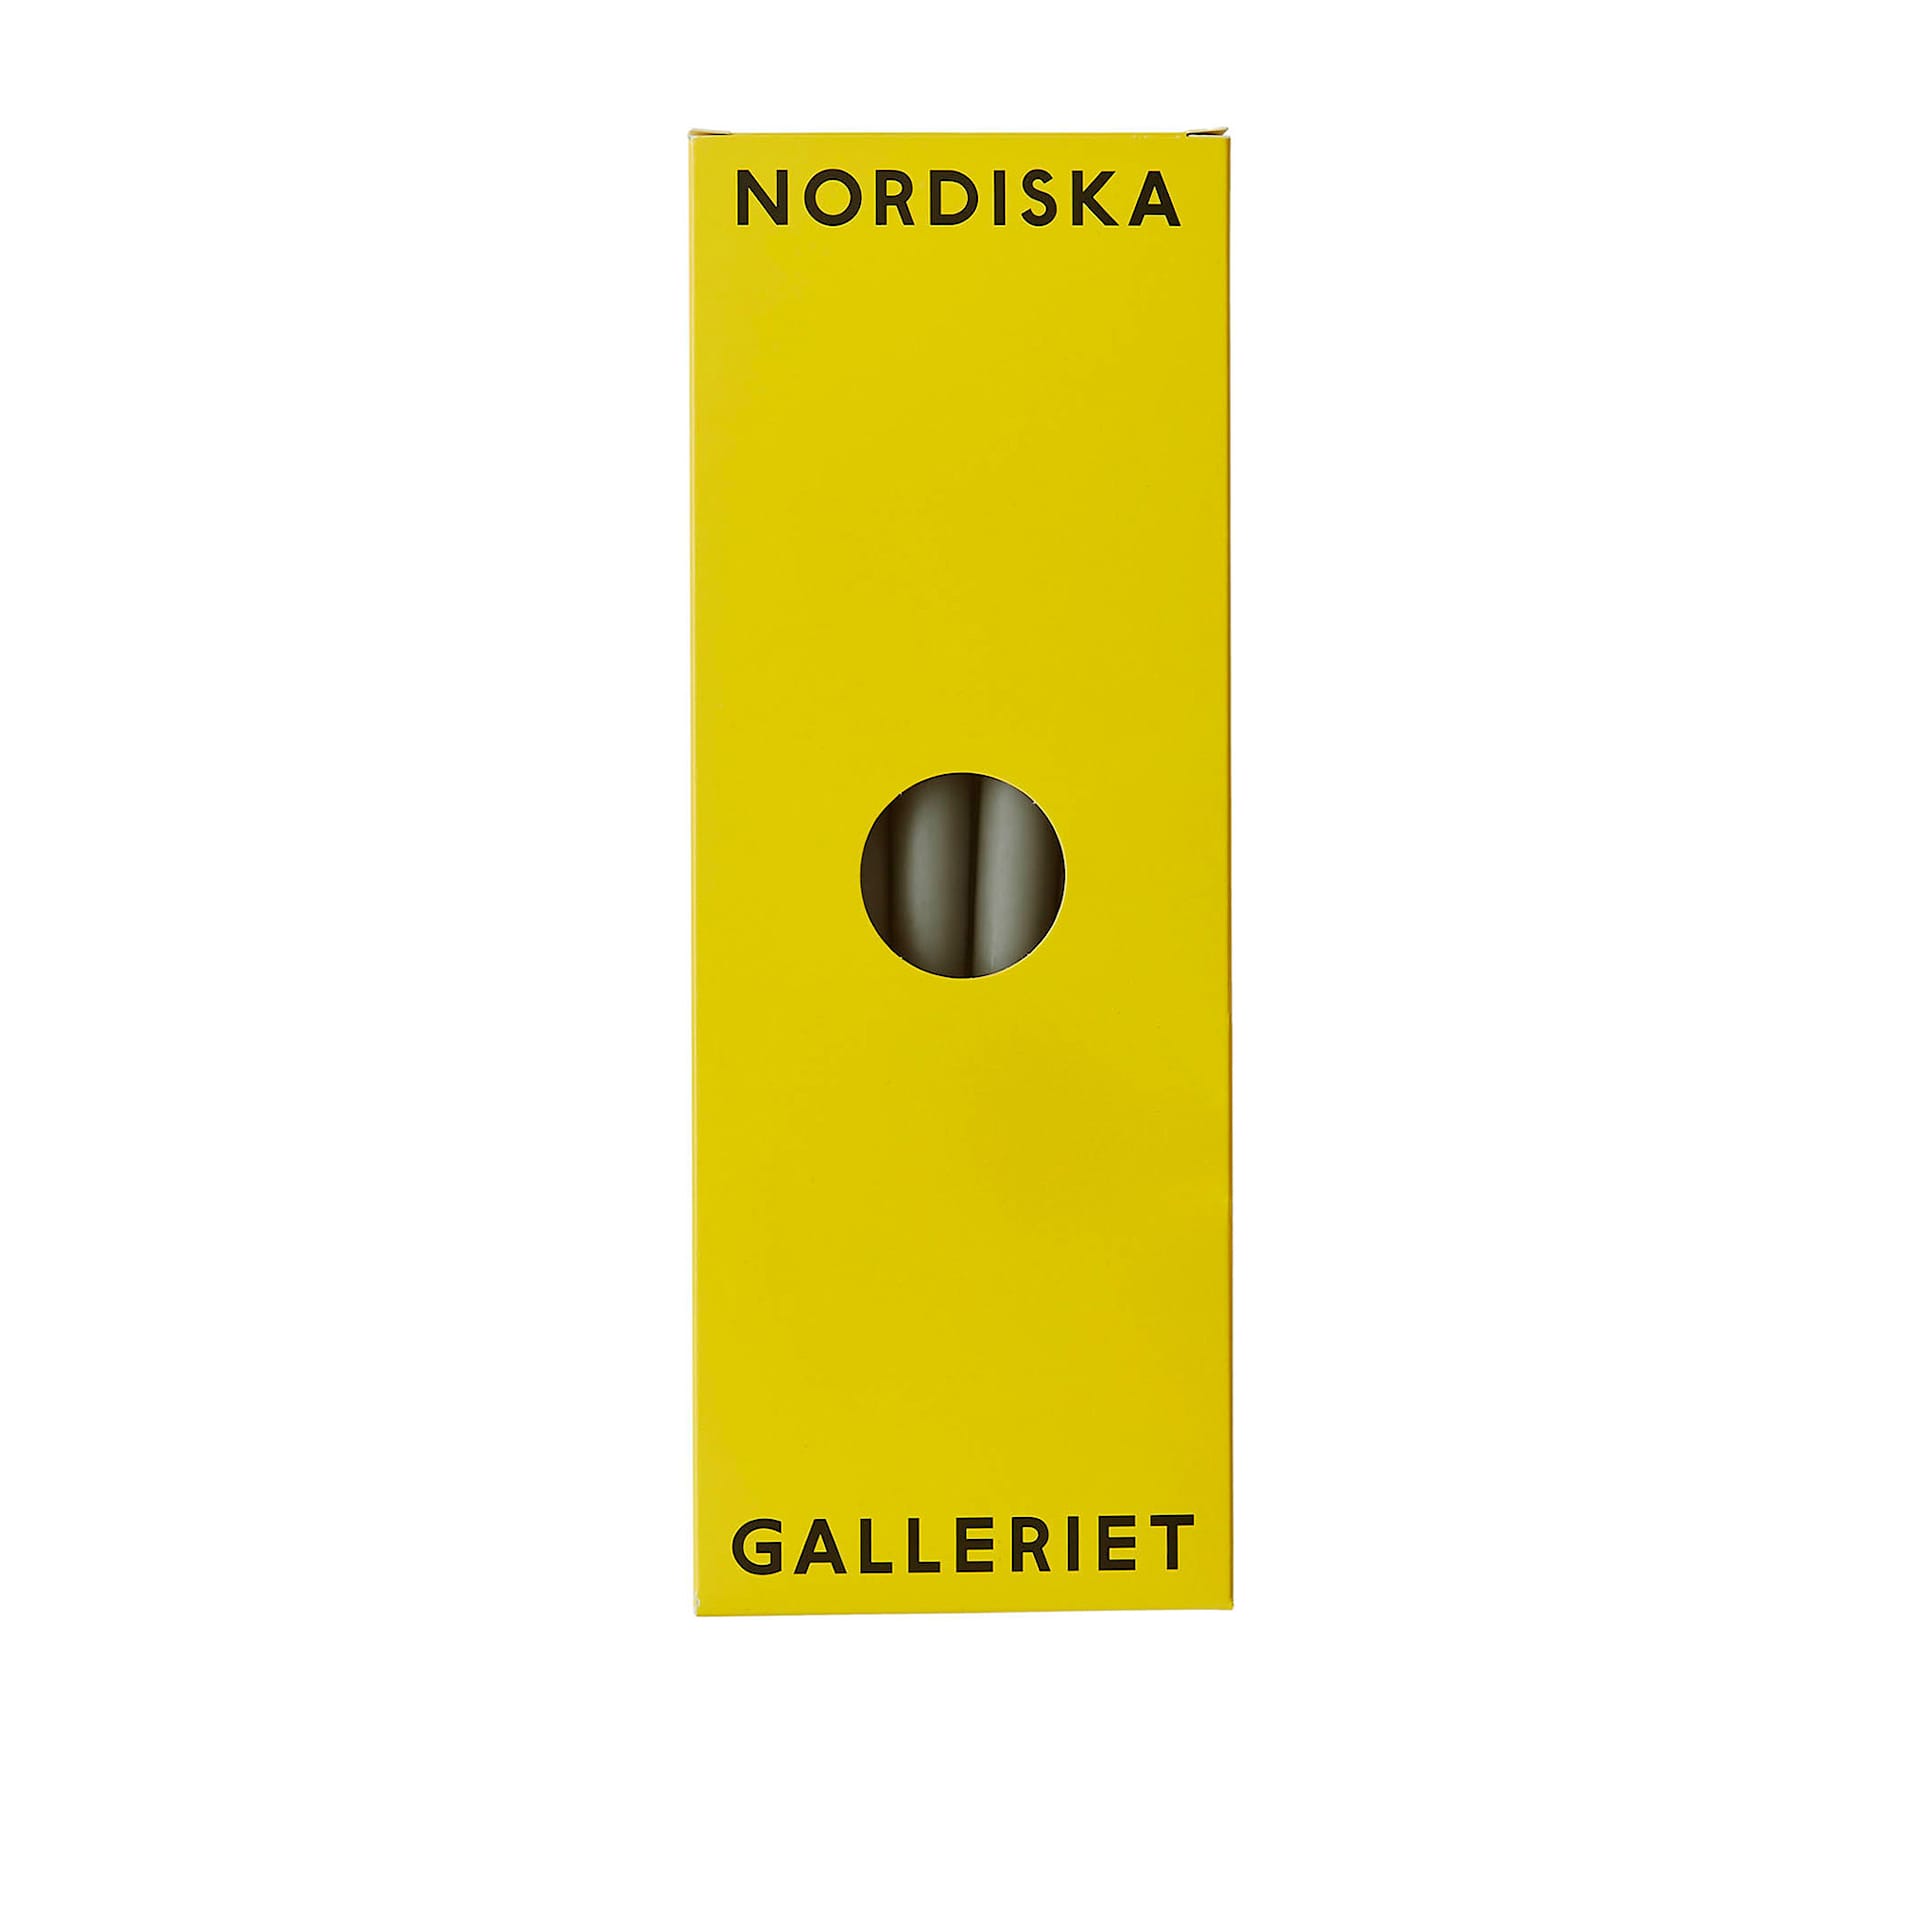 Nordiska Galleriet Candles Pack of 6 - Putty - Nordiska Galleriet - NO GA